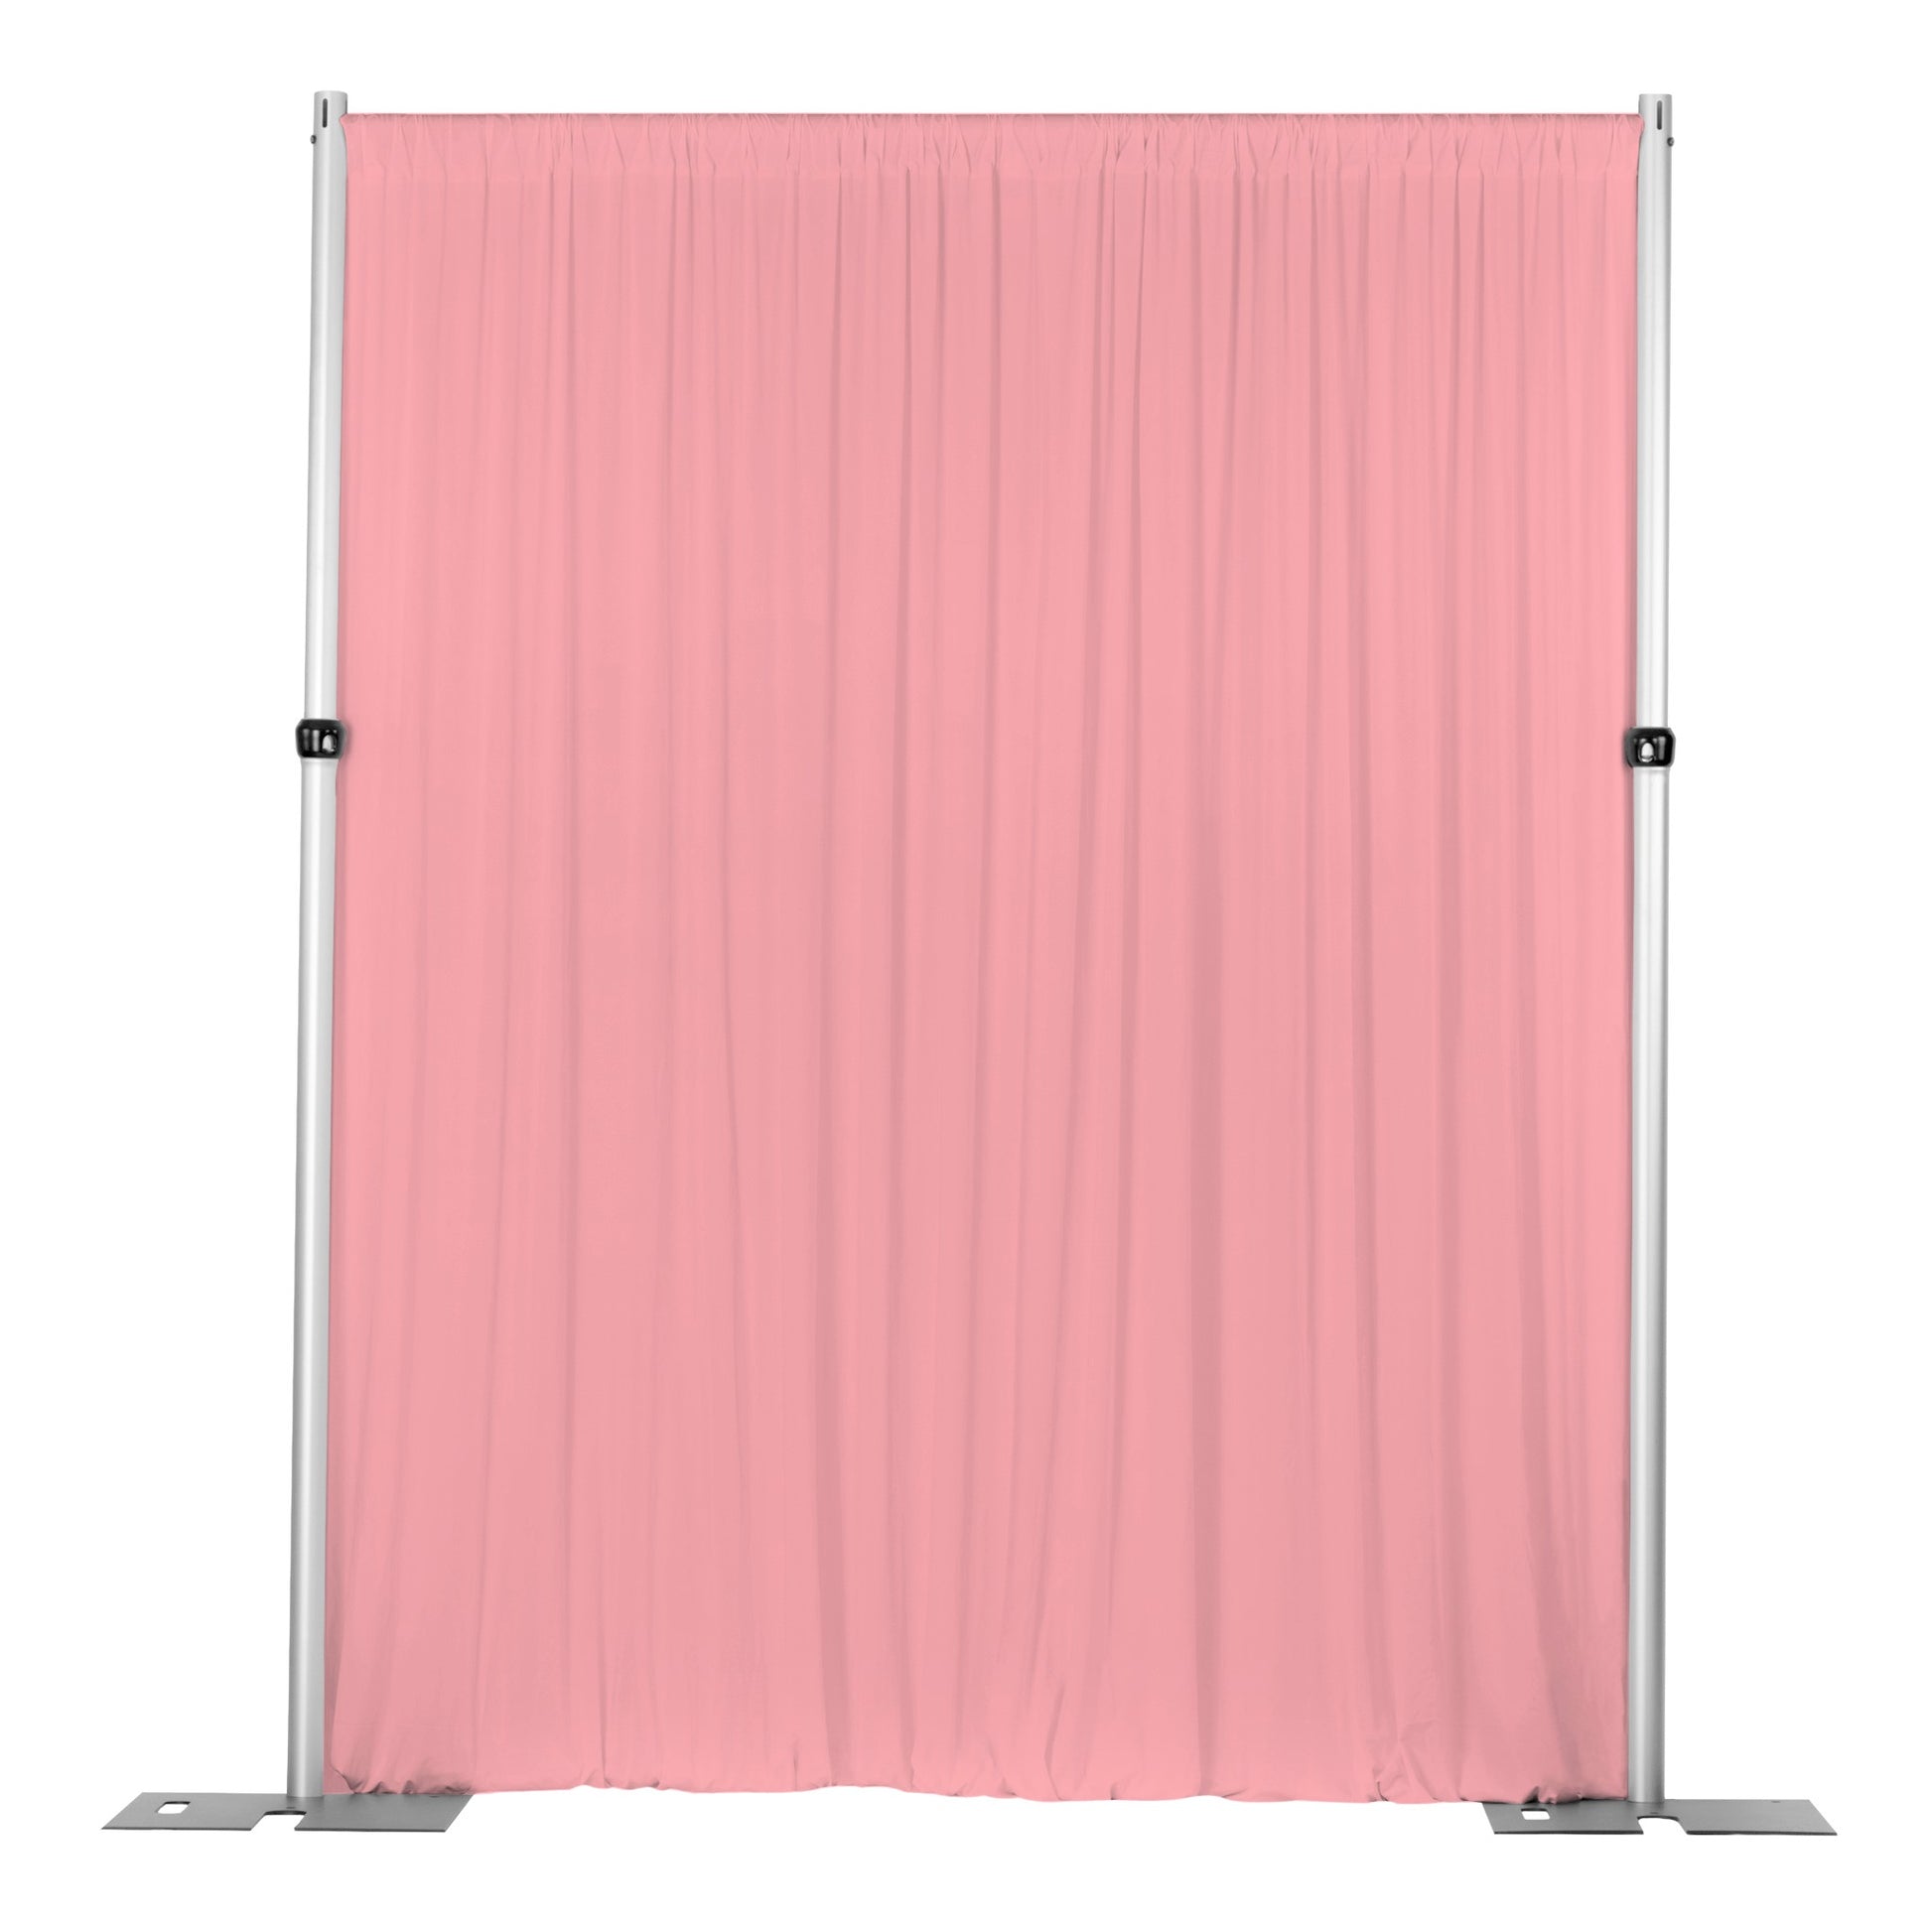 Spandex 4-way Stretch Drape Curtain 14ft H x 60" W - Dusty Rose/Mauve